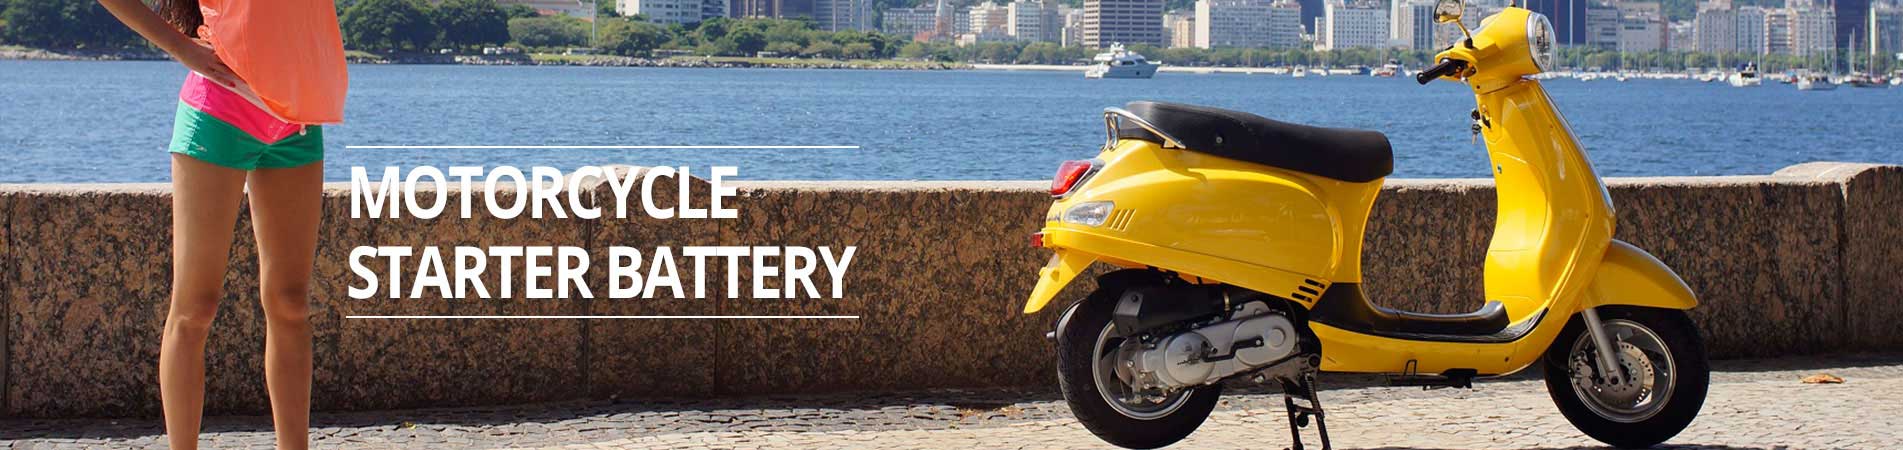 motorcycle starter battery banner